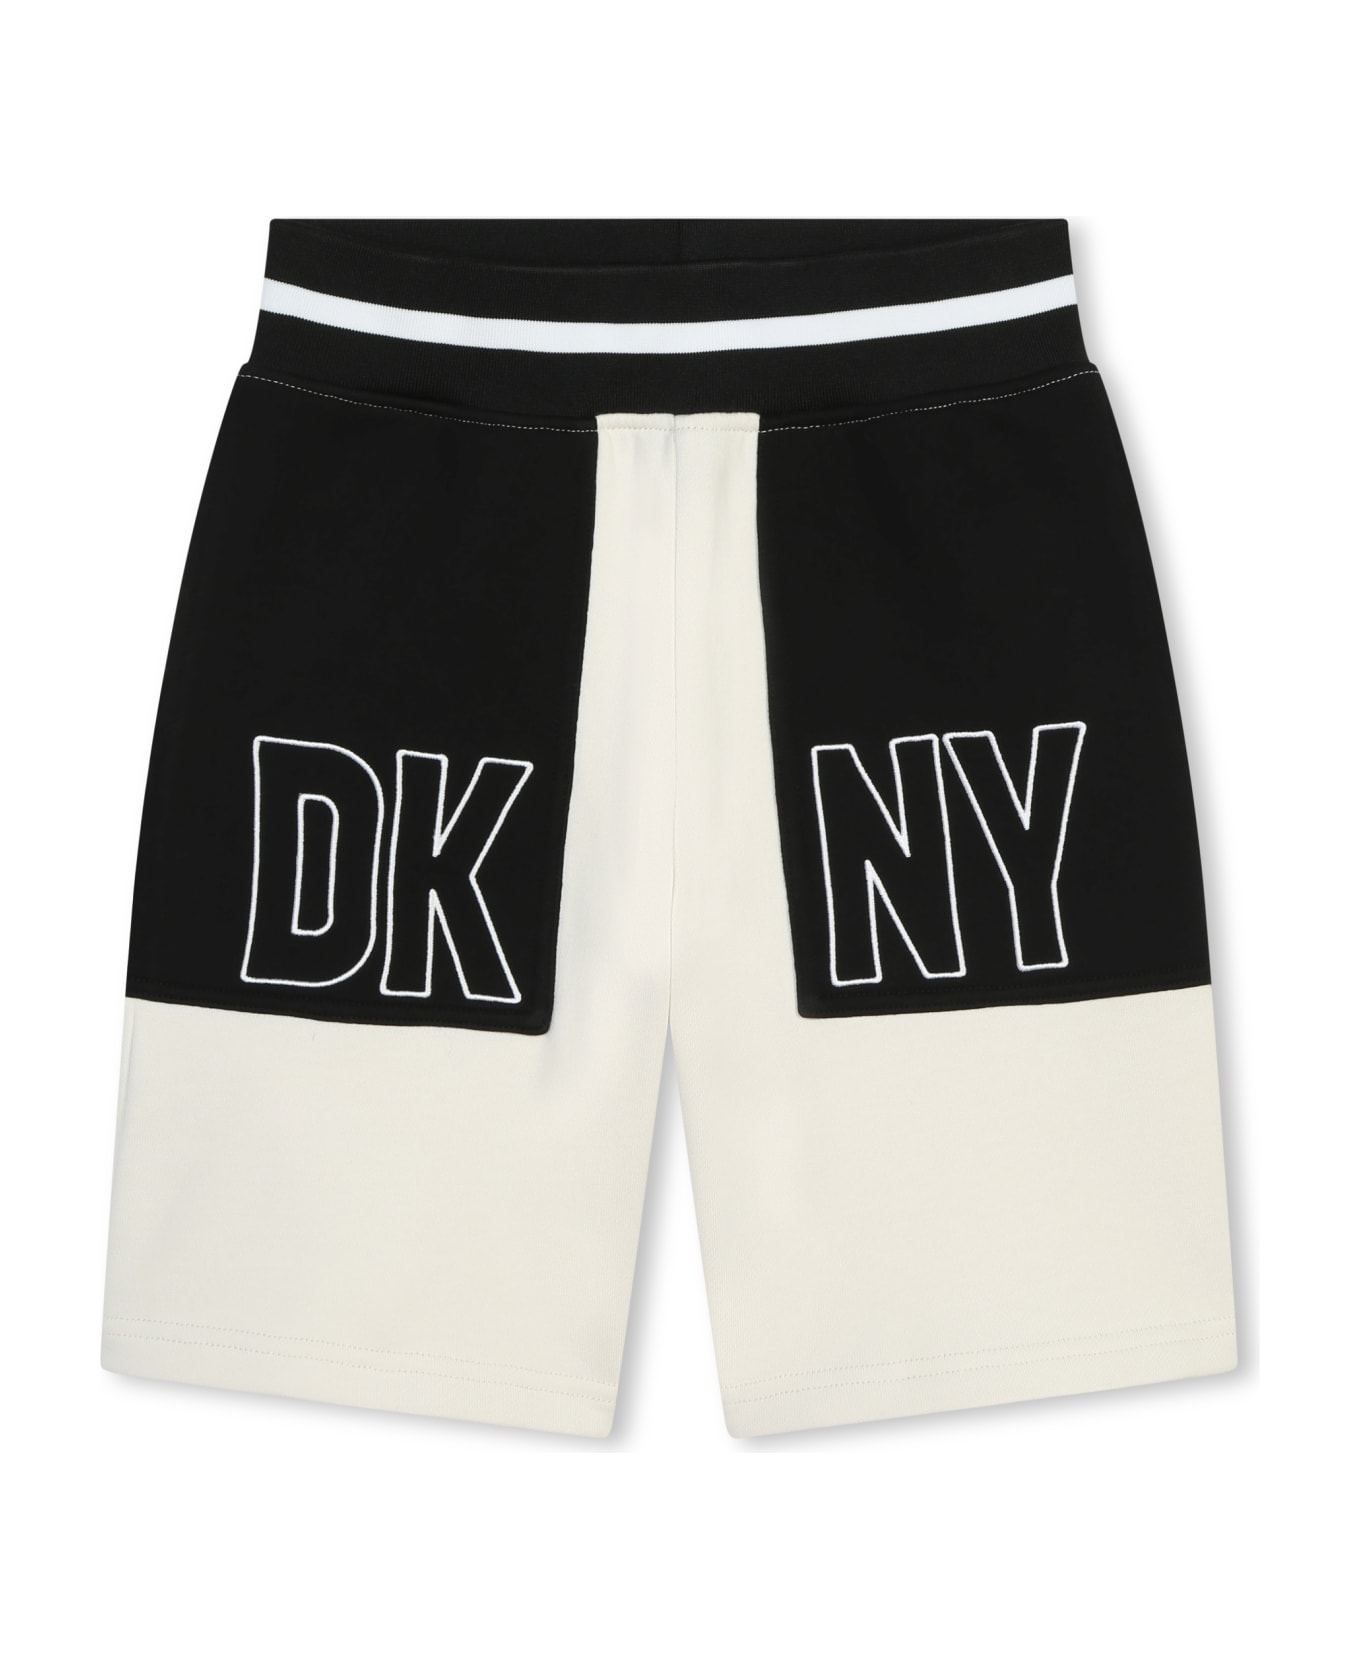 DKNY T-shirt With Print - White ジャンプスーツ